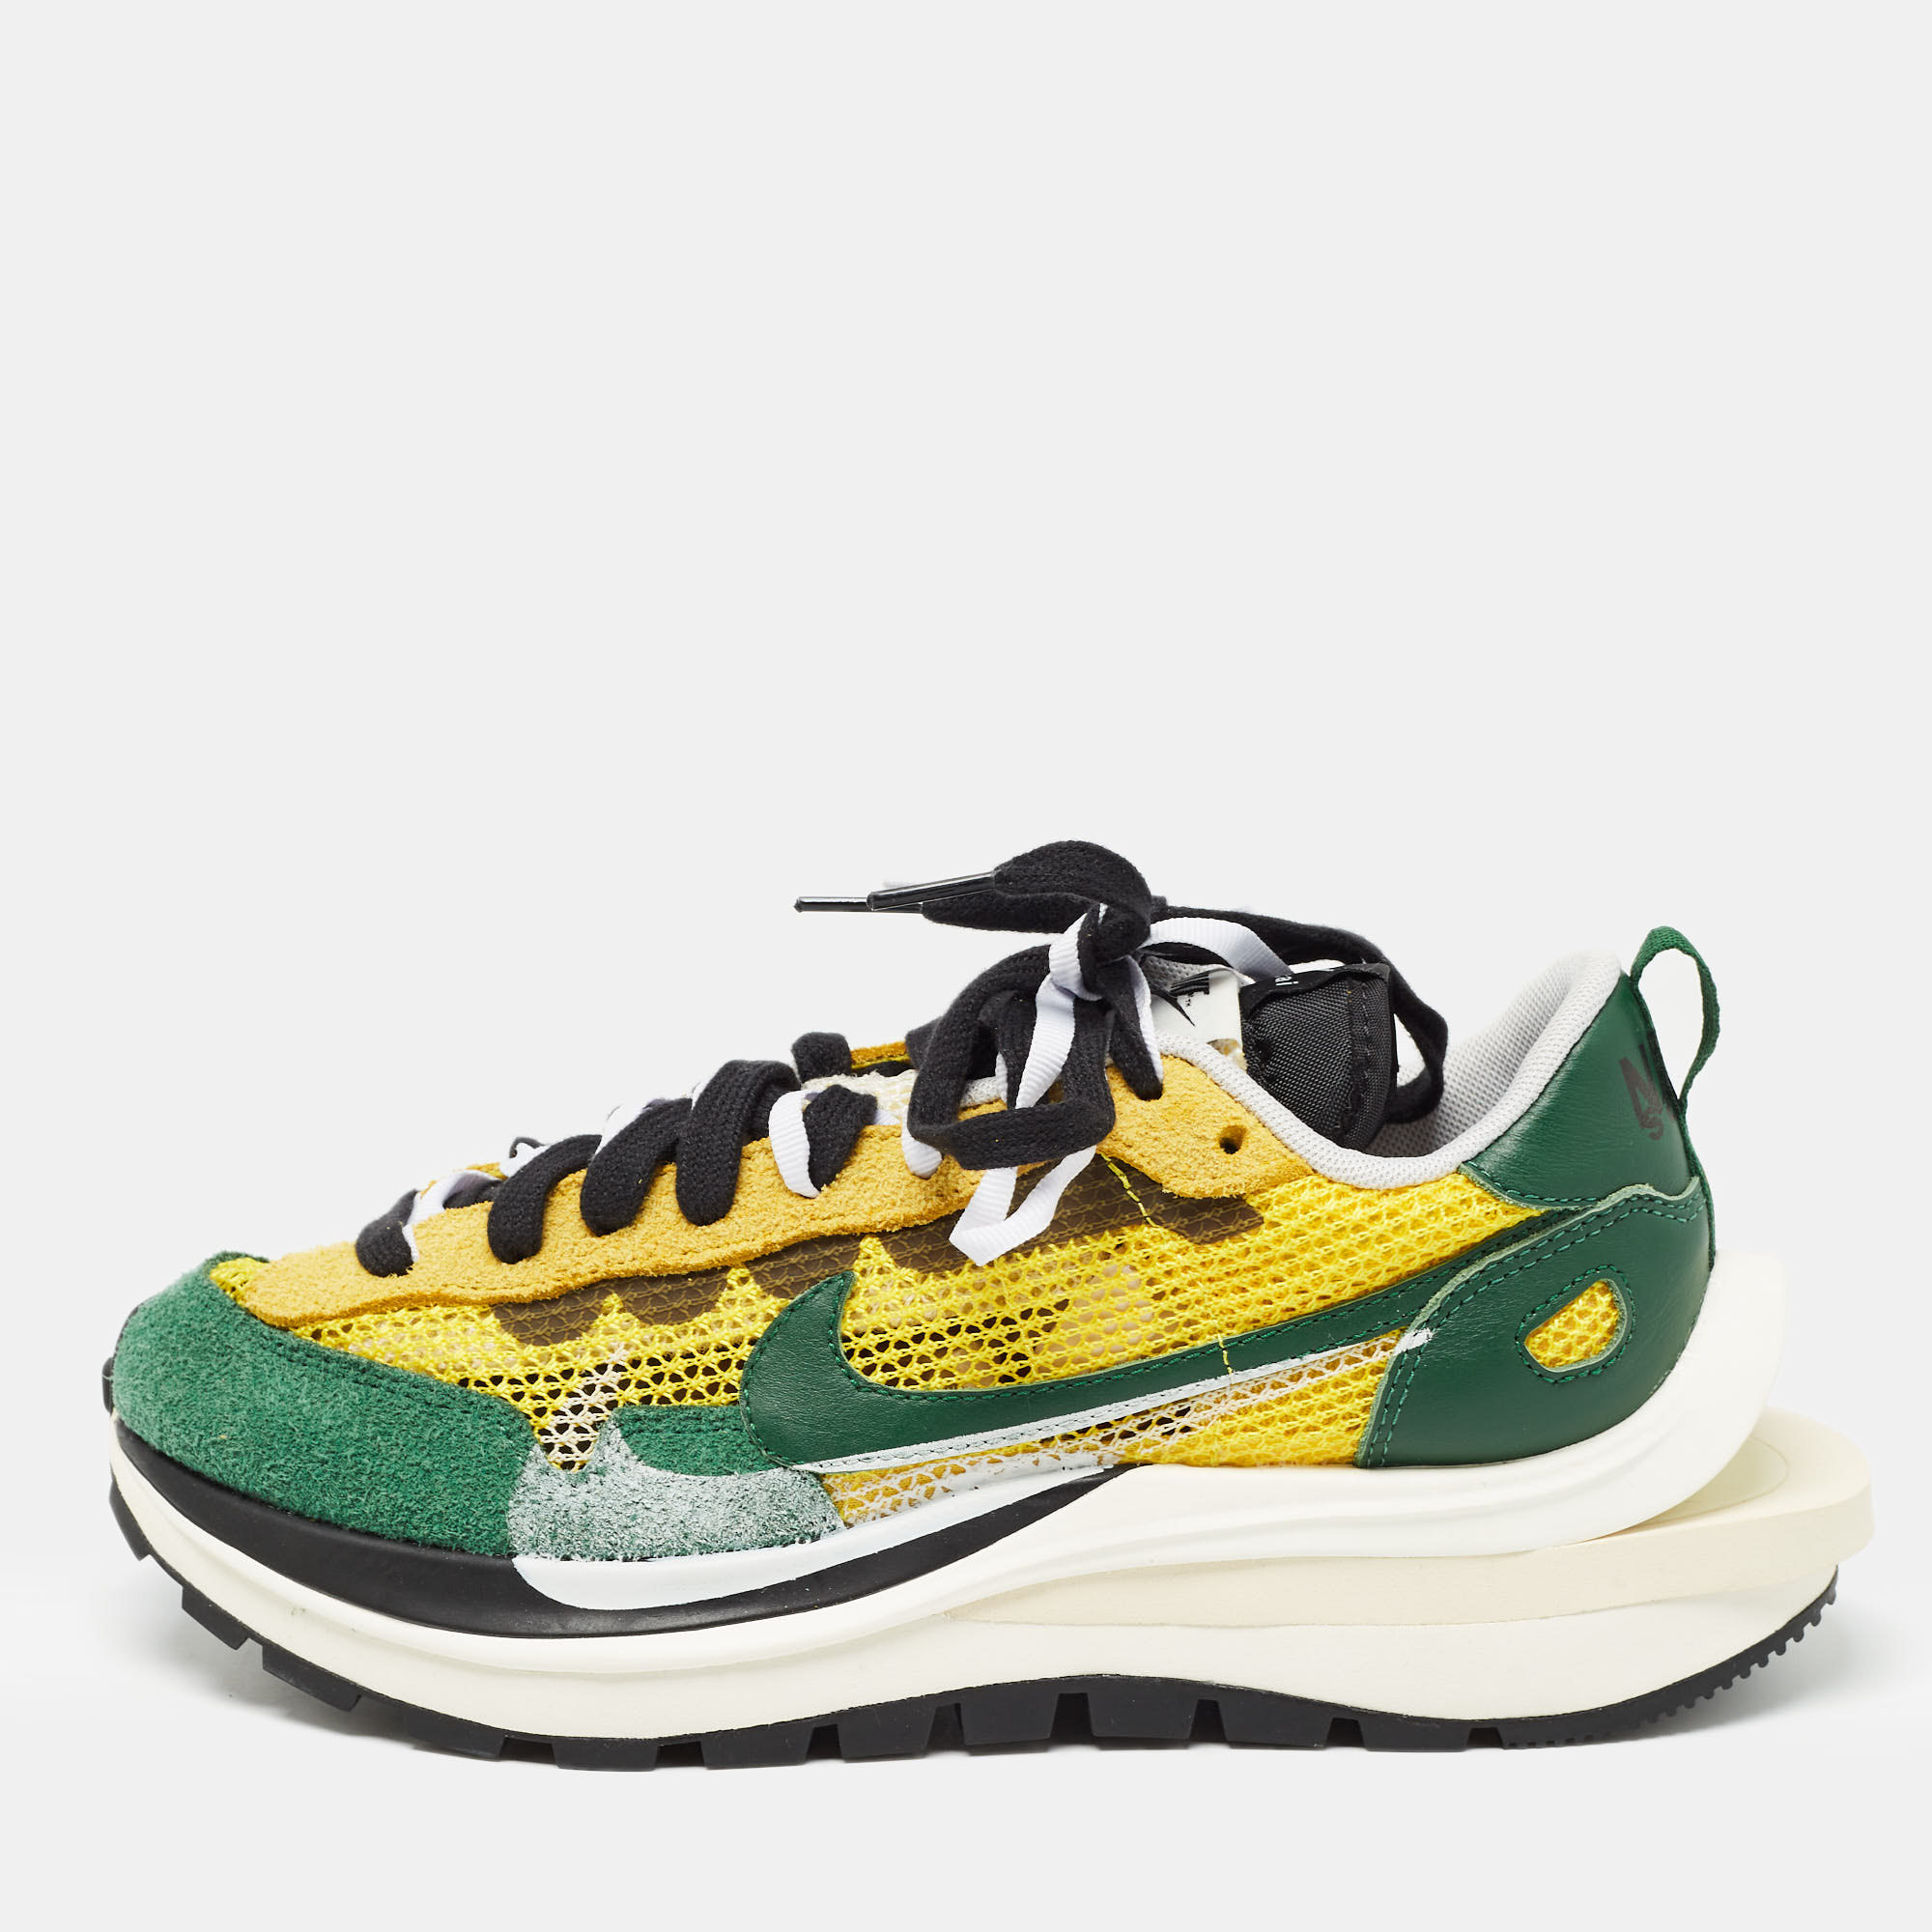 

Nike x Sacai Green/Yellow Mesh and Suede Vaporwaffle Sneakers Size